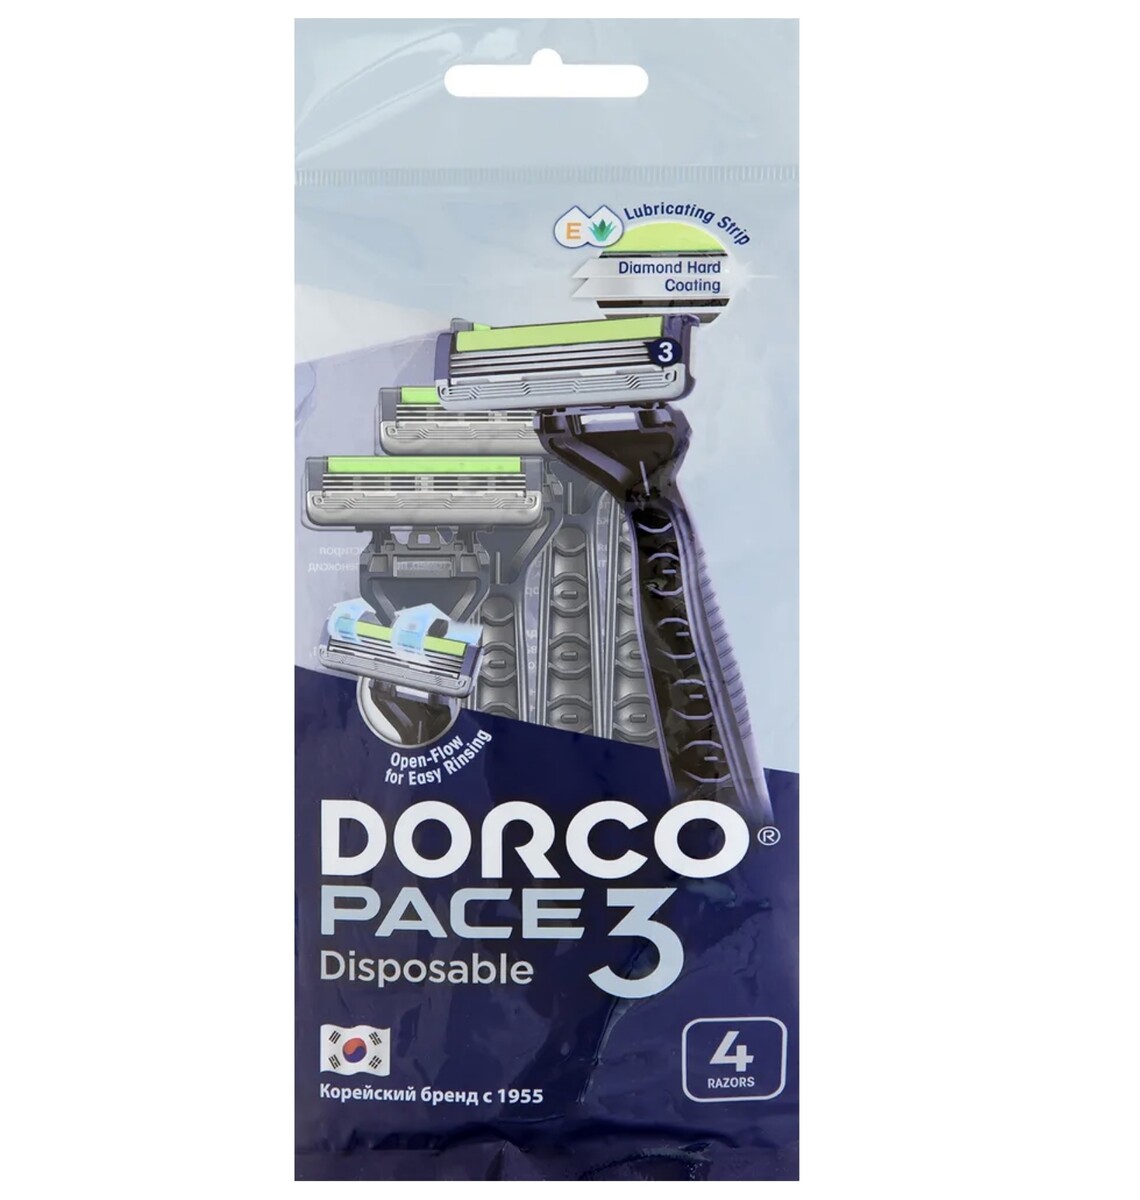 Dorco pace3 однораз.станок 4шт. плав.голв, с 3лезвиями увл.полоса new (ю.корея) dorco pace3 cross станок 5 s система с 3лезвиями ю корея